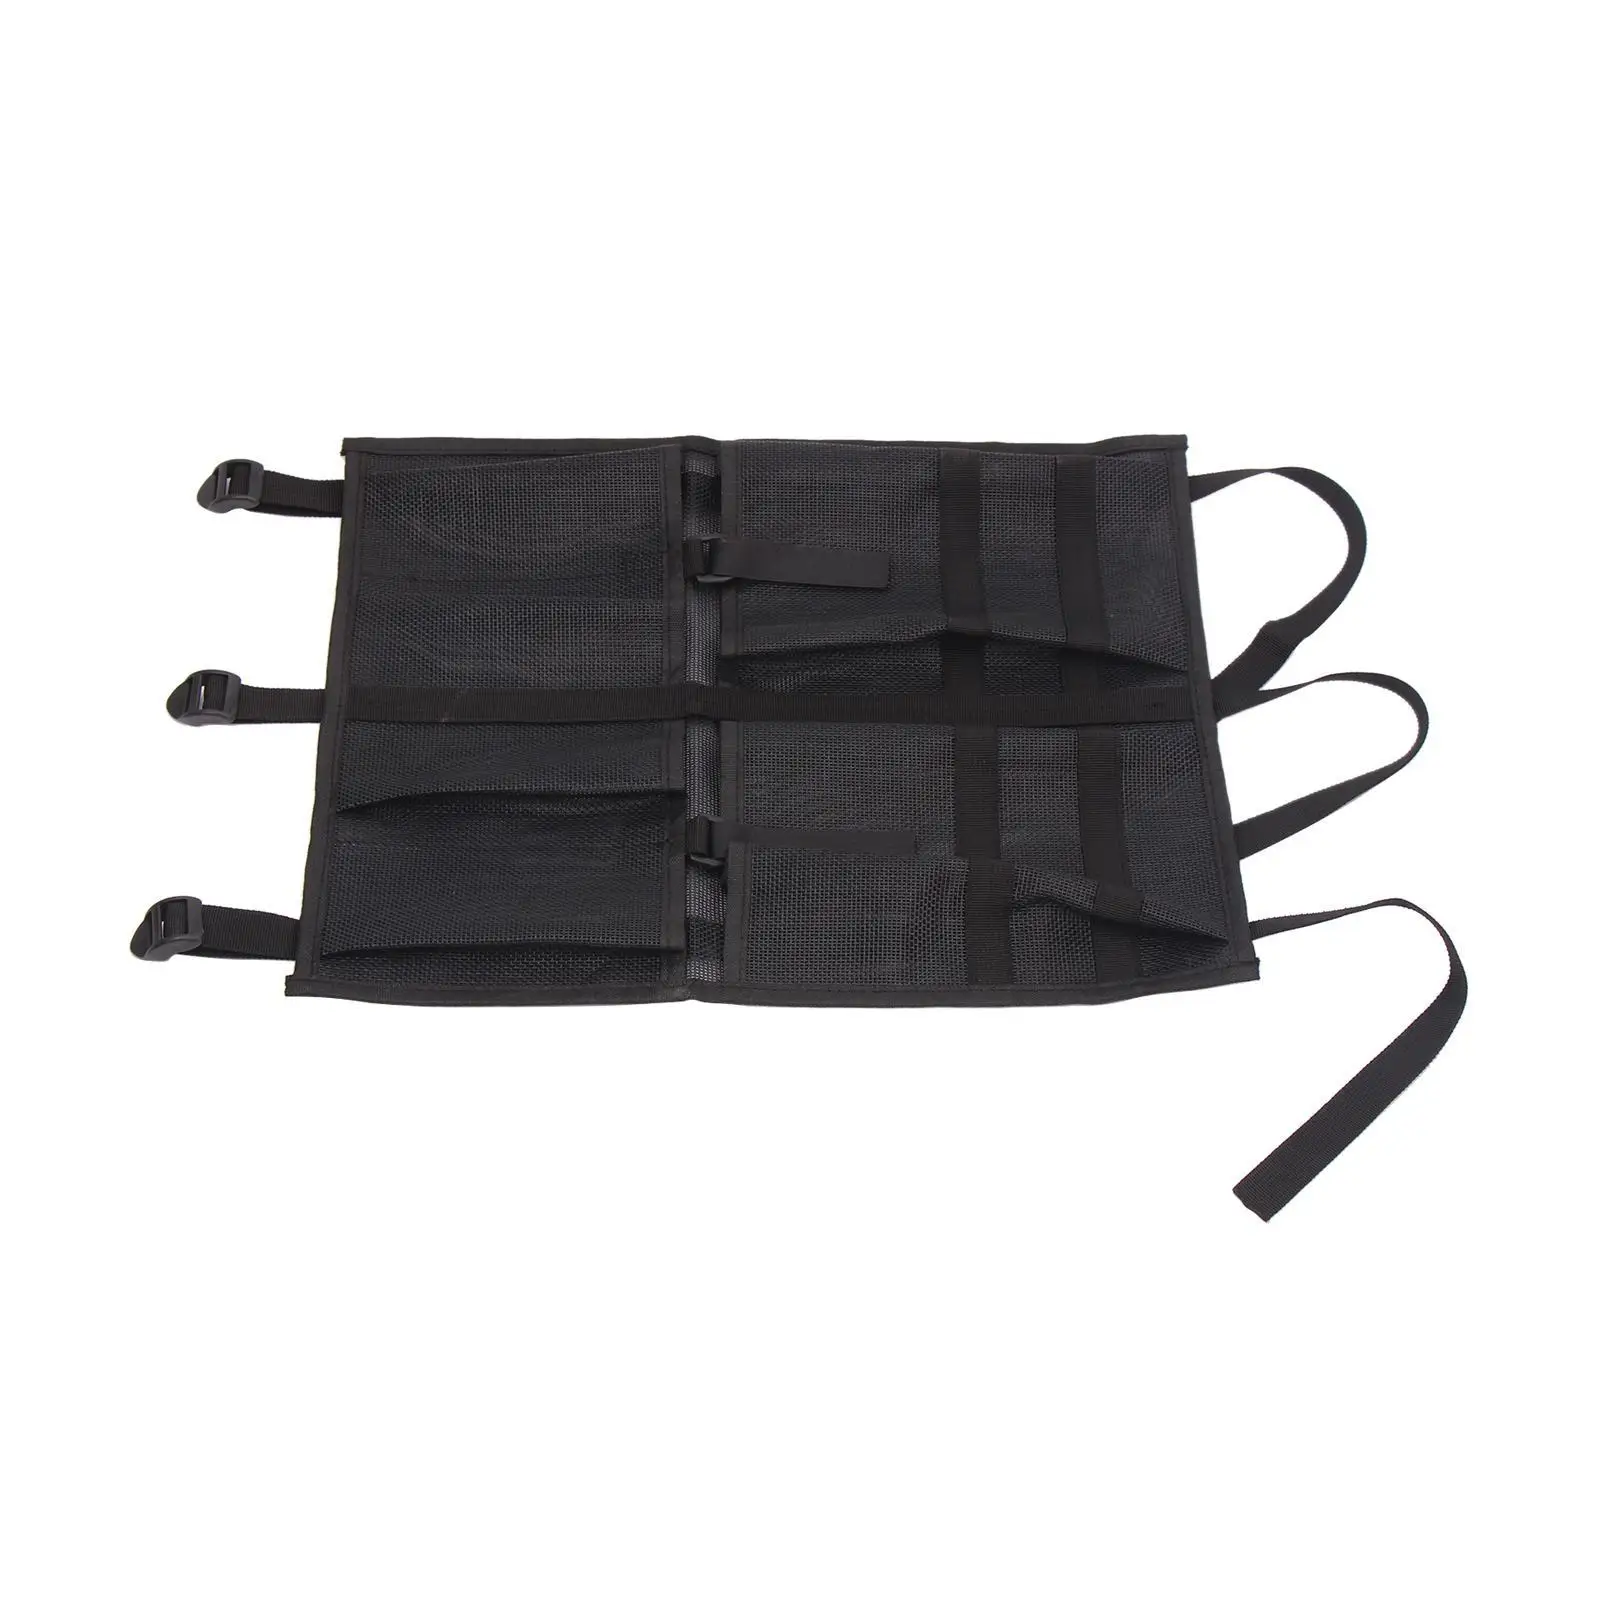 Kayak Mesh Bag Black Nylon Gear Accessories  Organizer Accessories